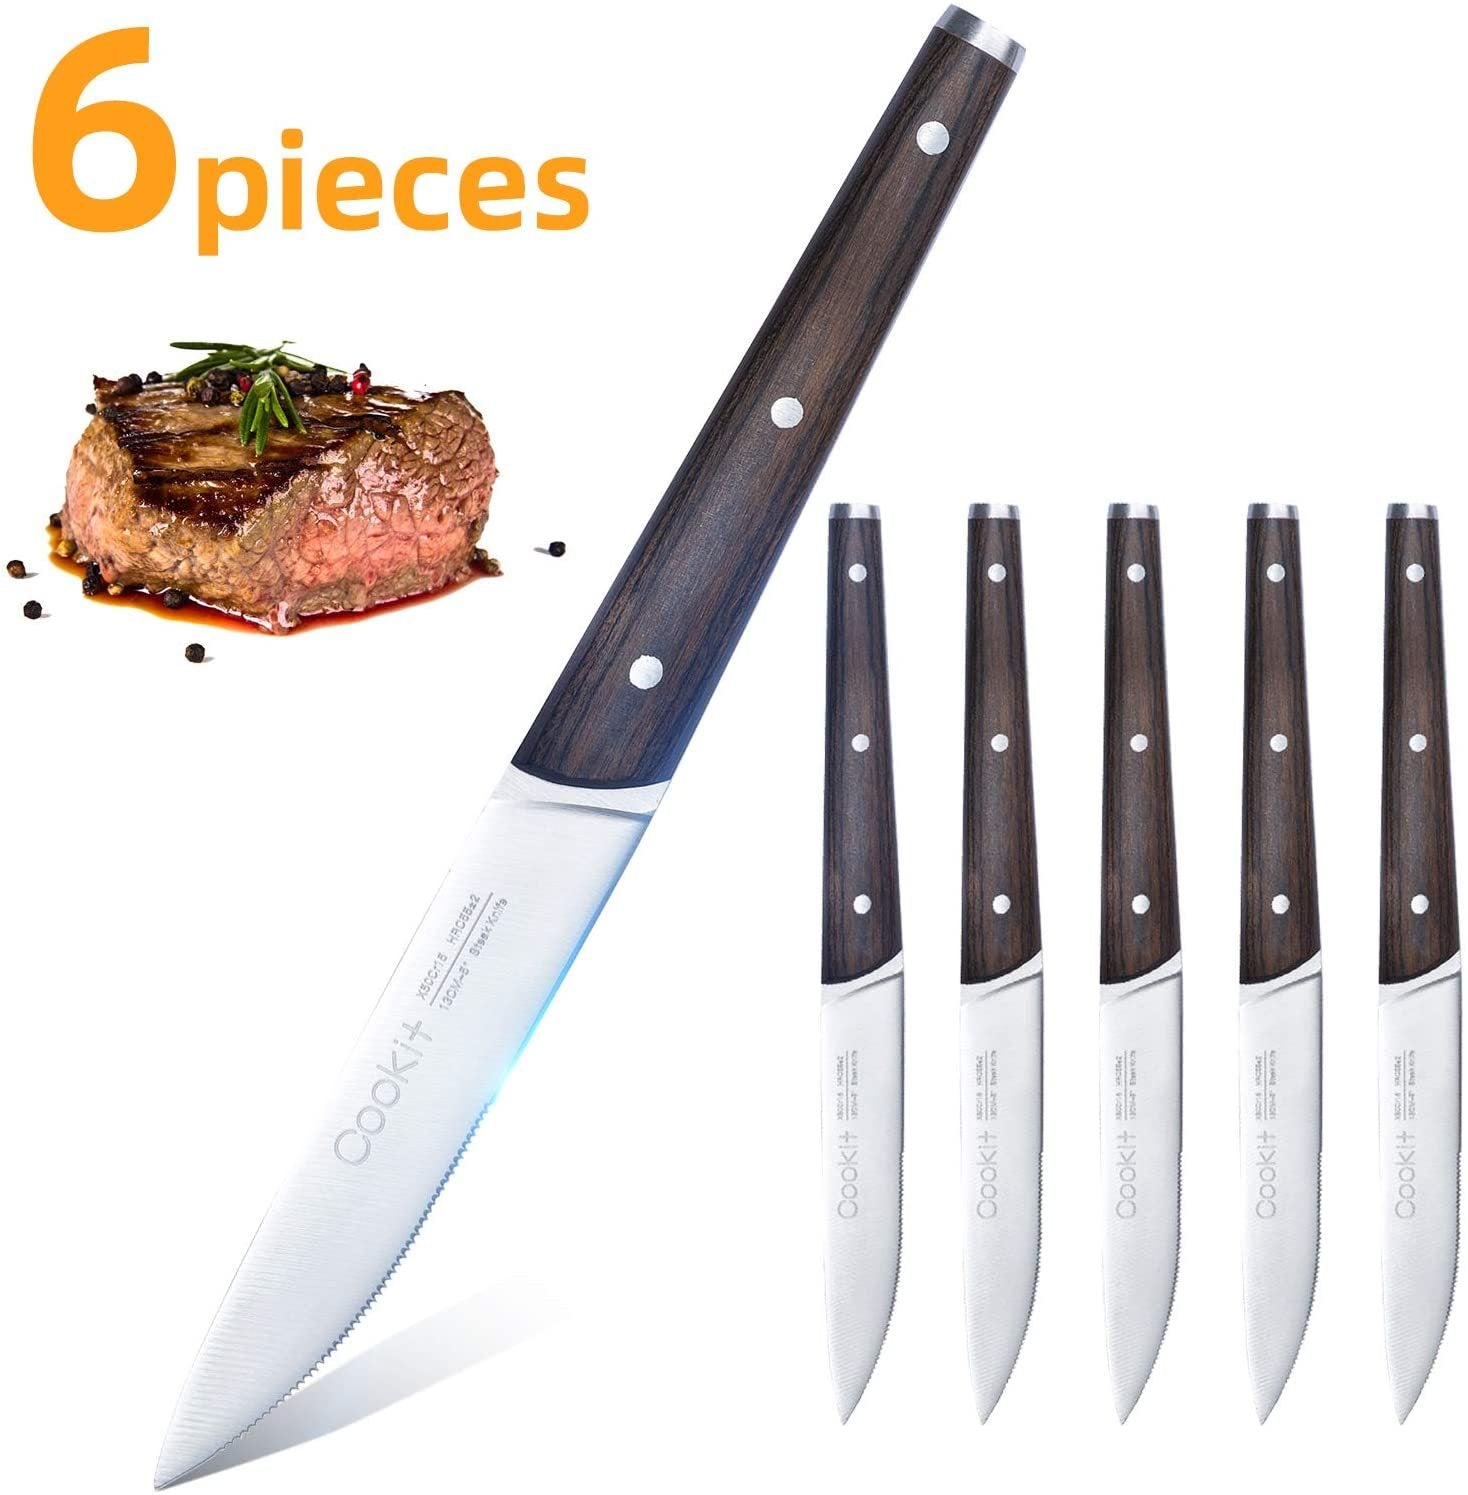 6-Piece Serrated Modern Steak Knife Set - High-Carbon Steel